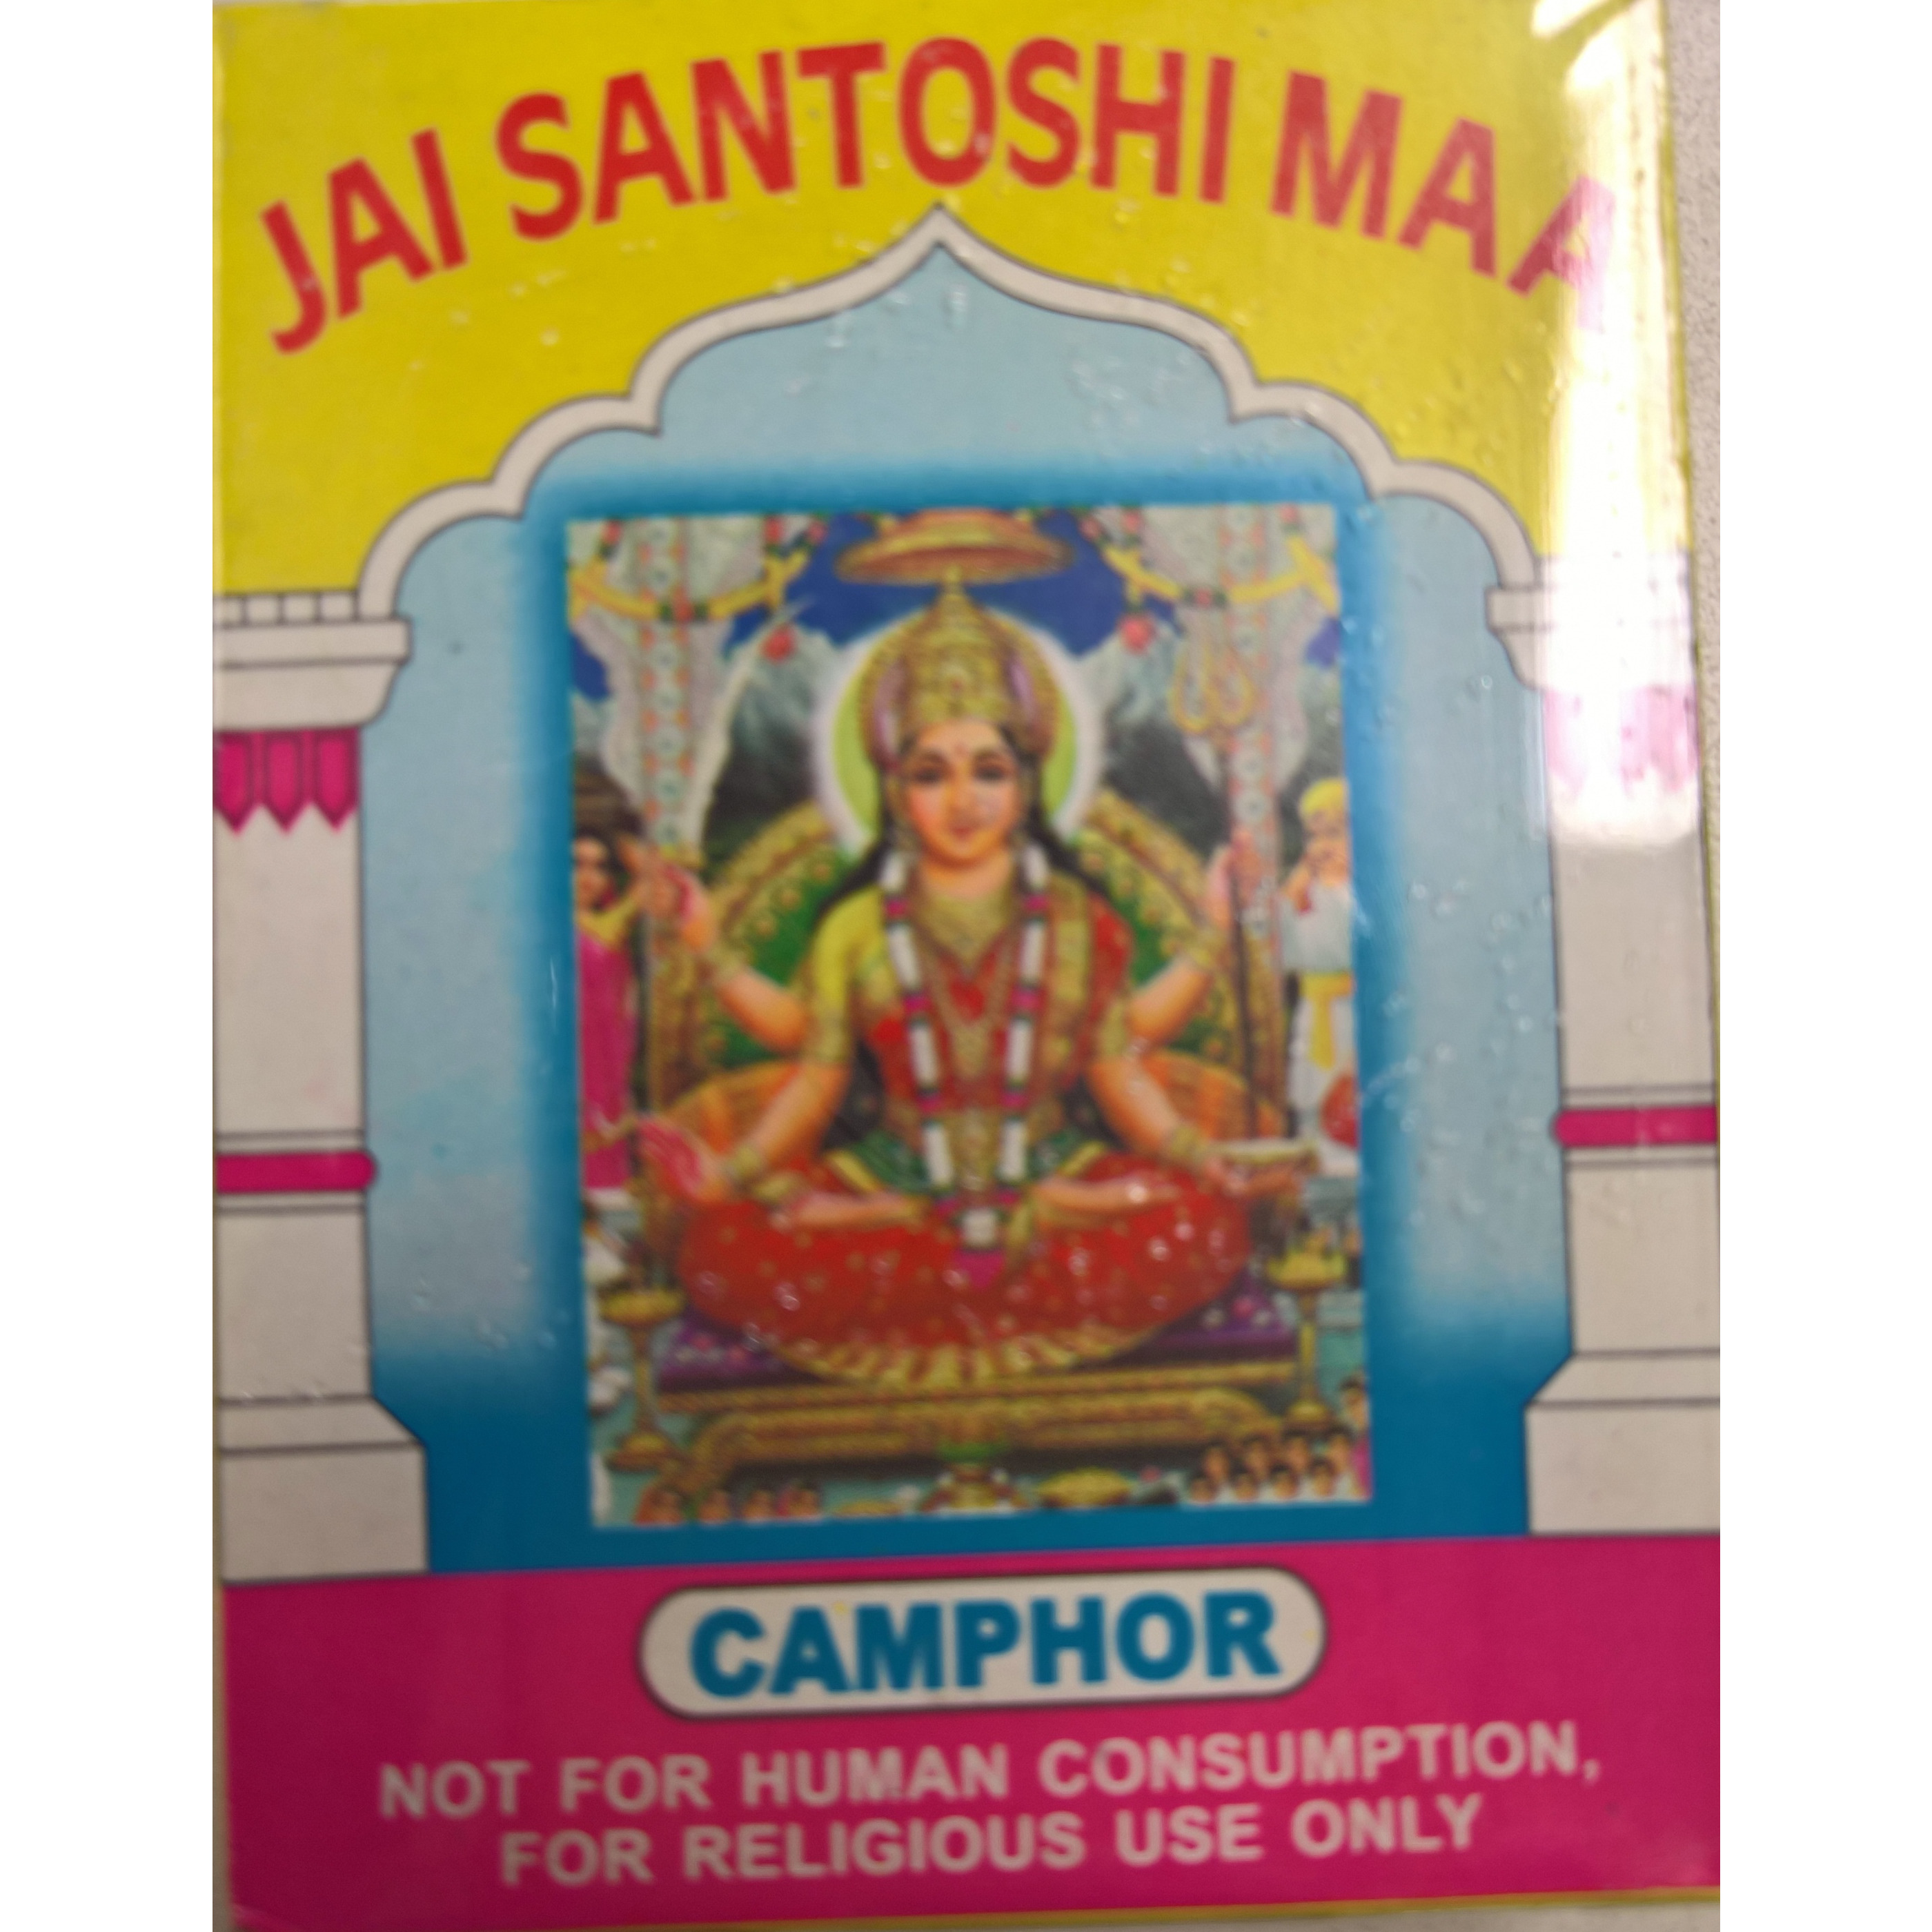 Jai Santoshi Maa Camphor 100 Tablets